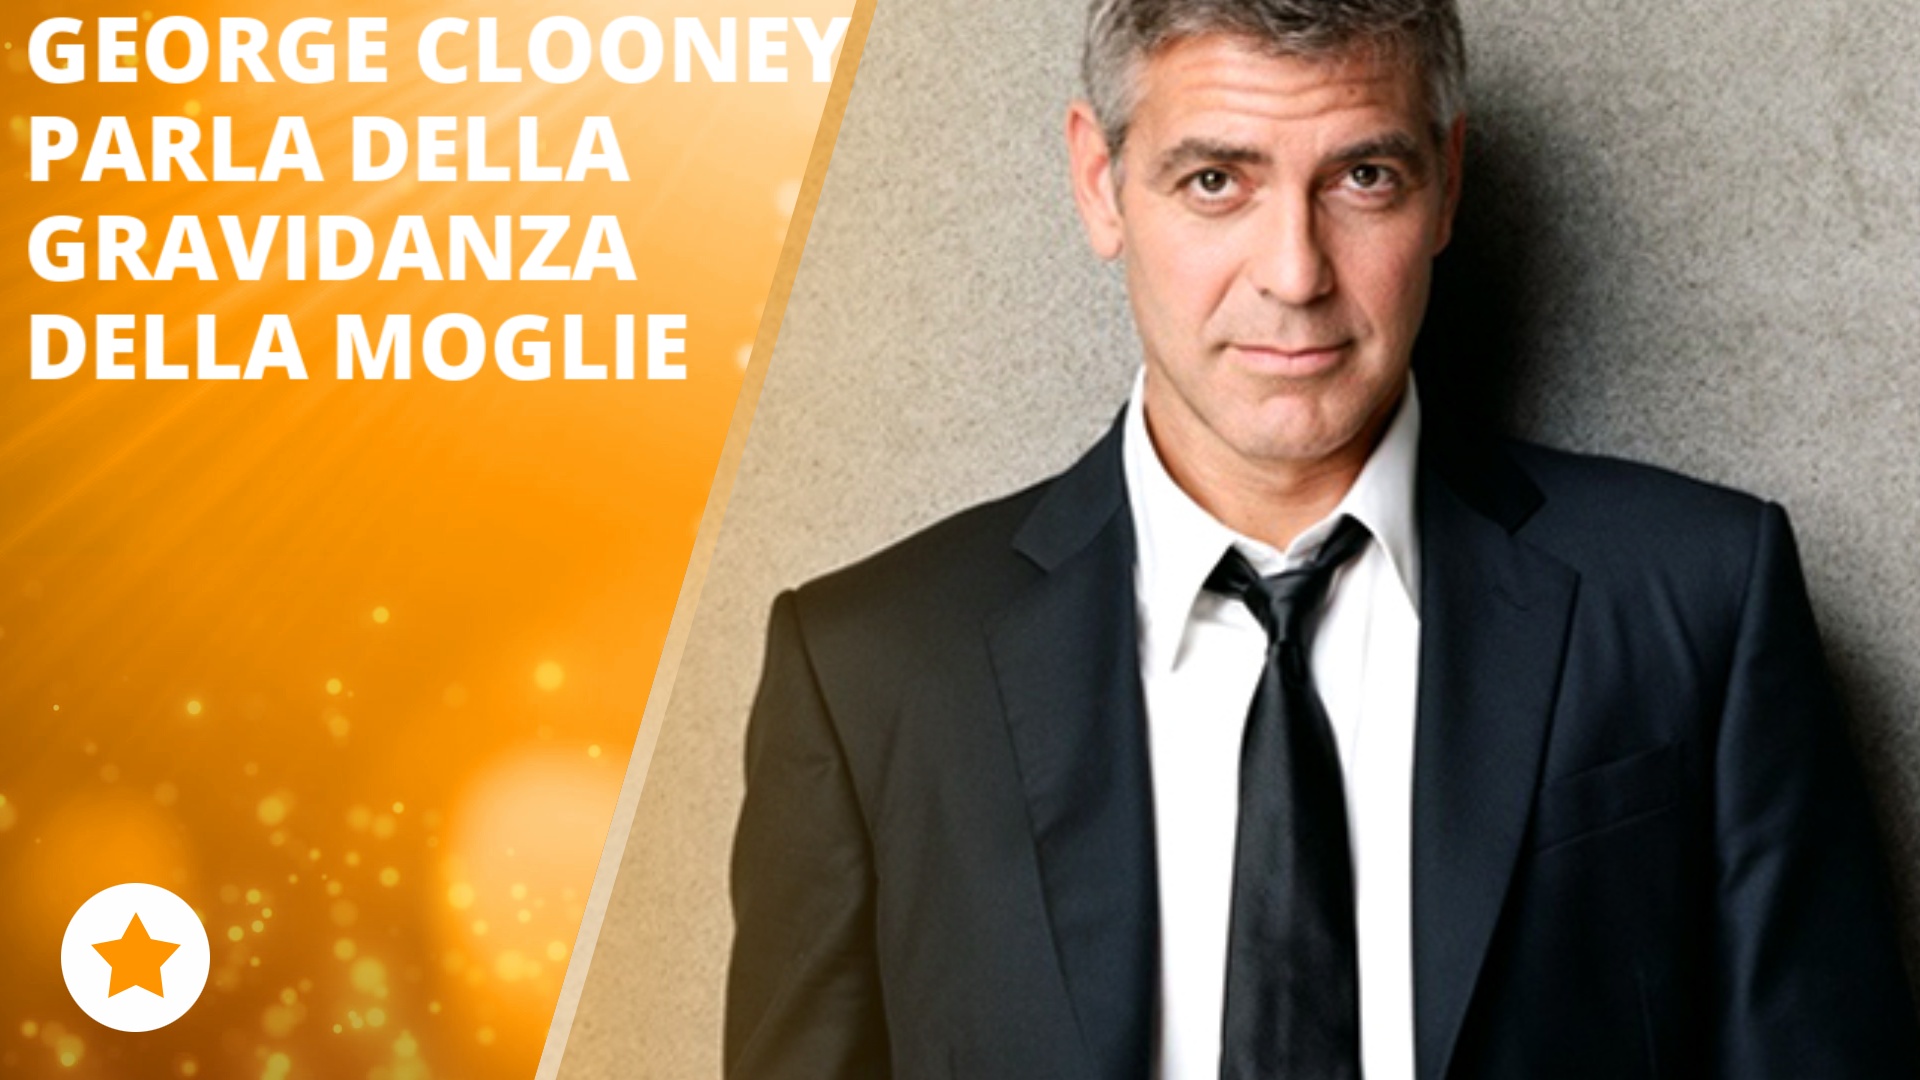 George Clooney sara' papa' a breve